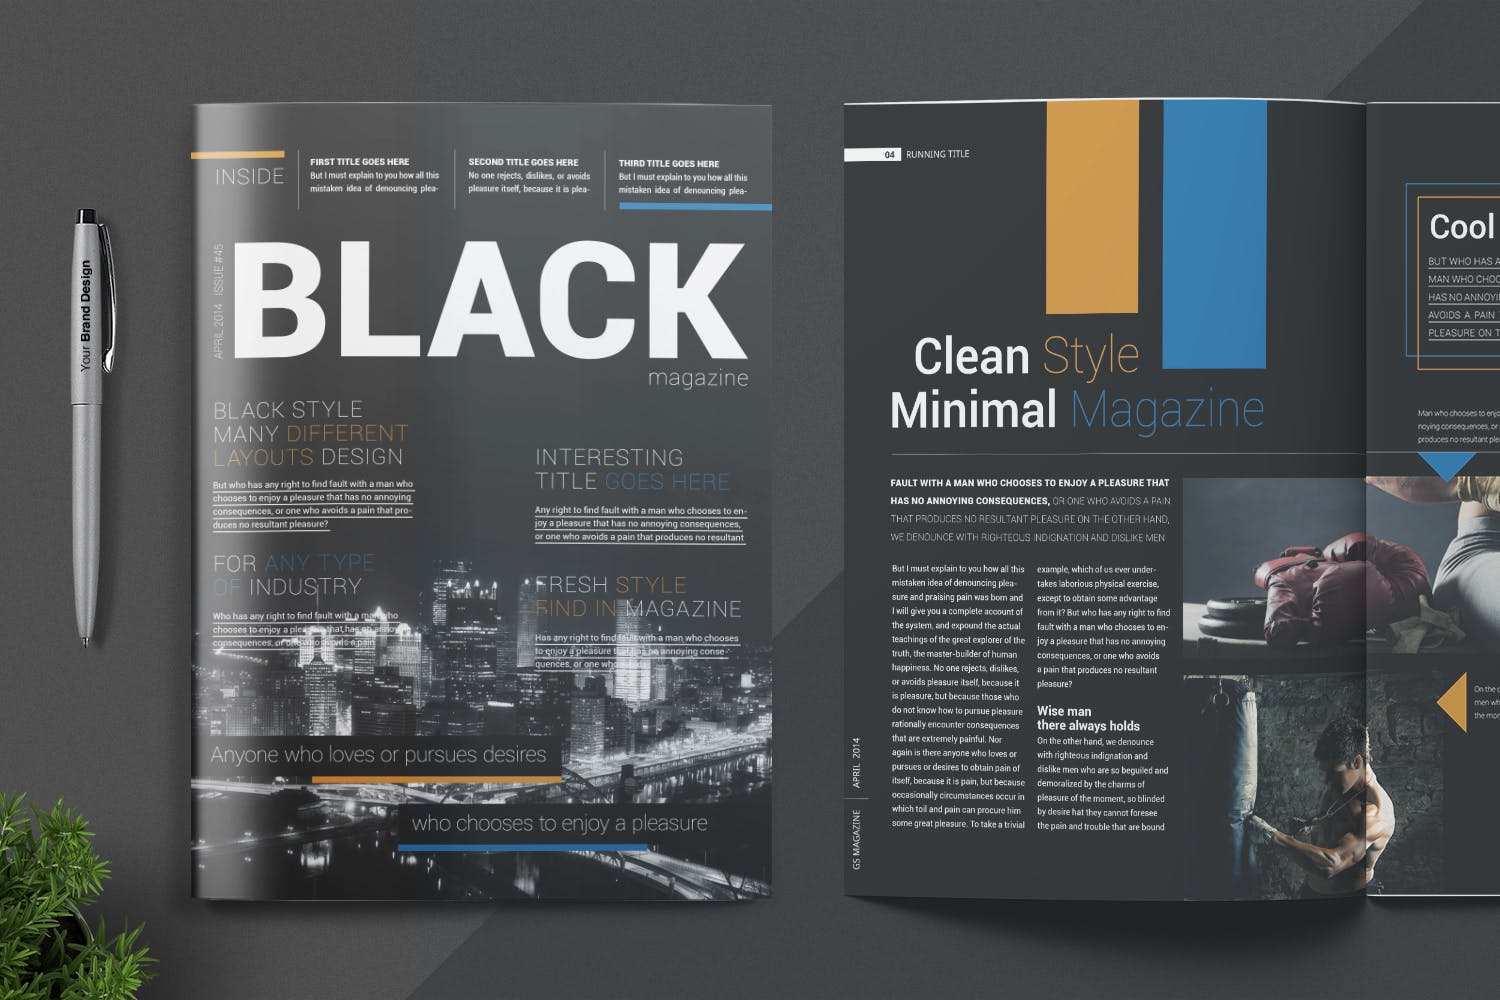 Clean style magazine cover design